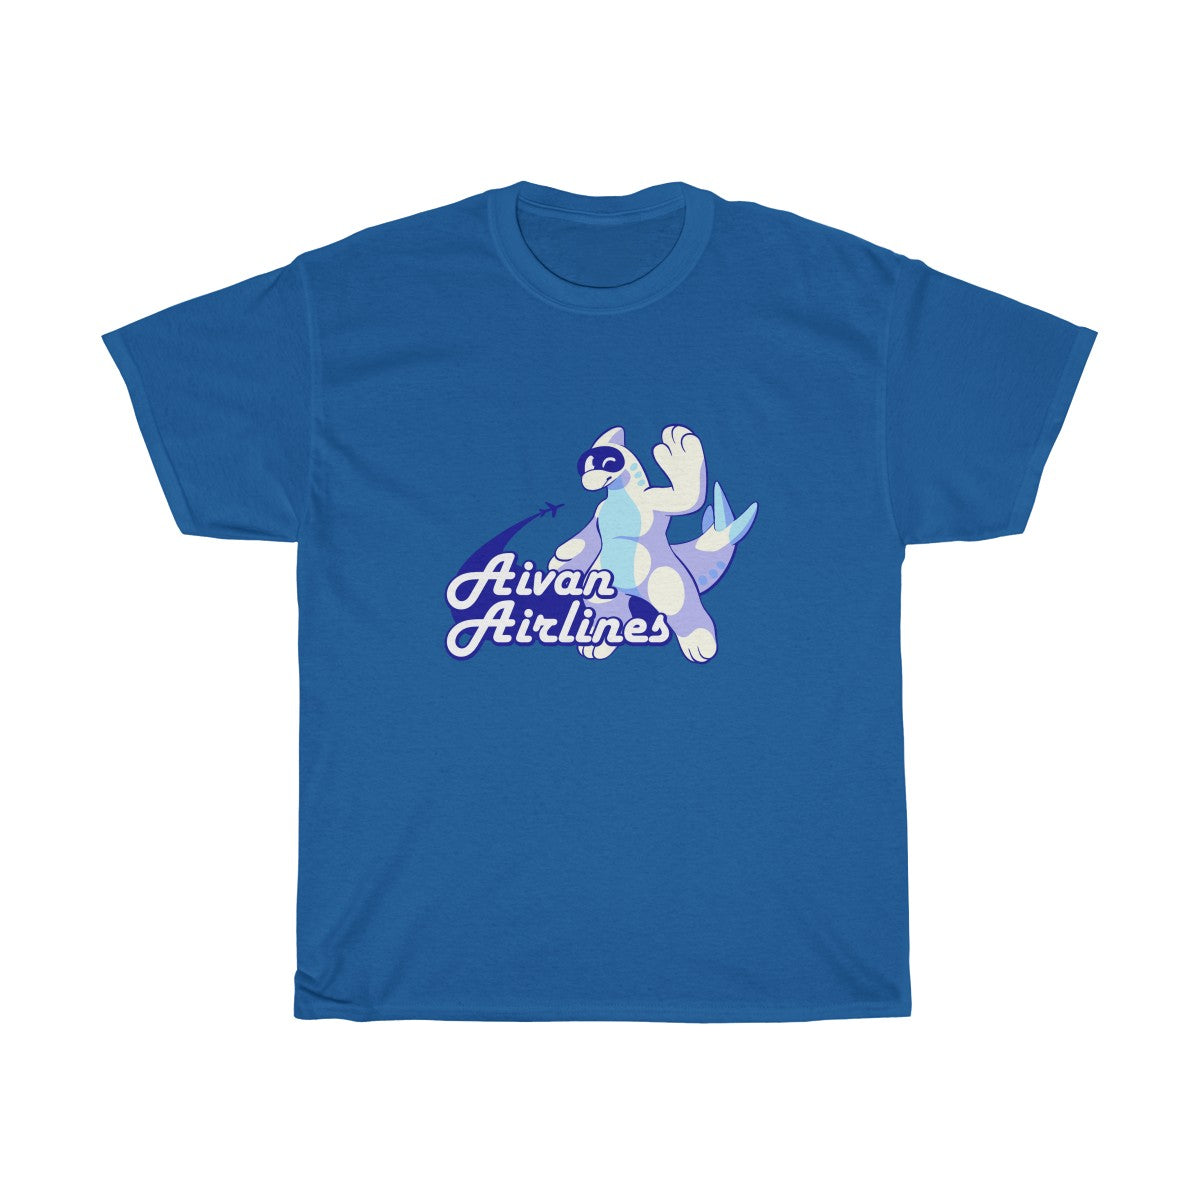 Avian Airlines - T-Shirt T-Shirt Motfal Royal Blue S 